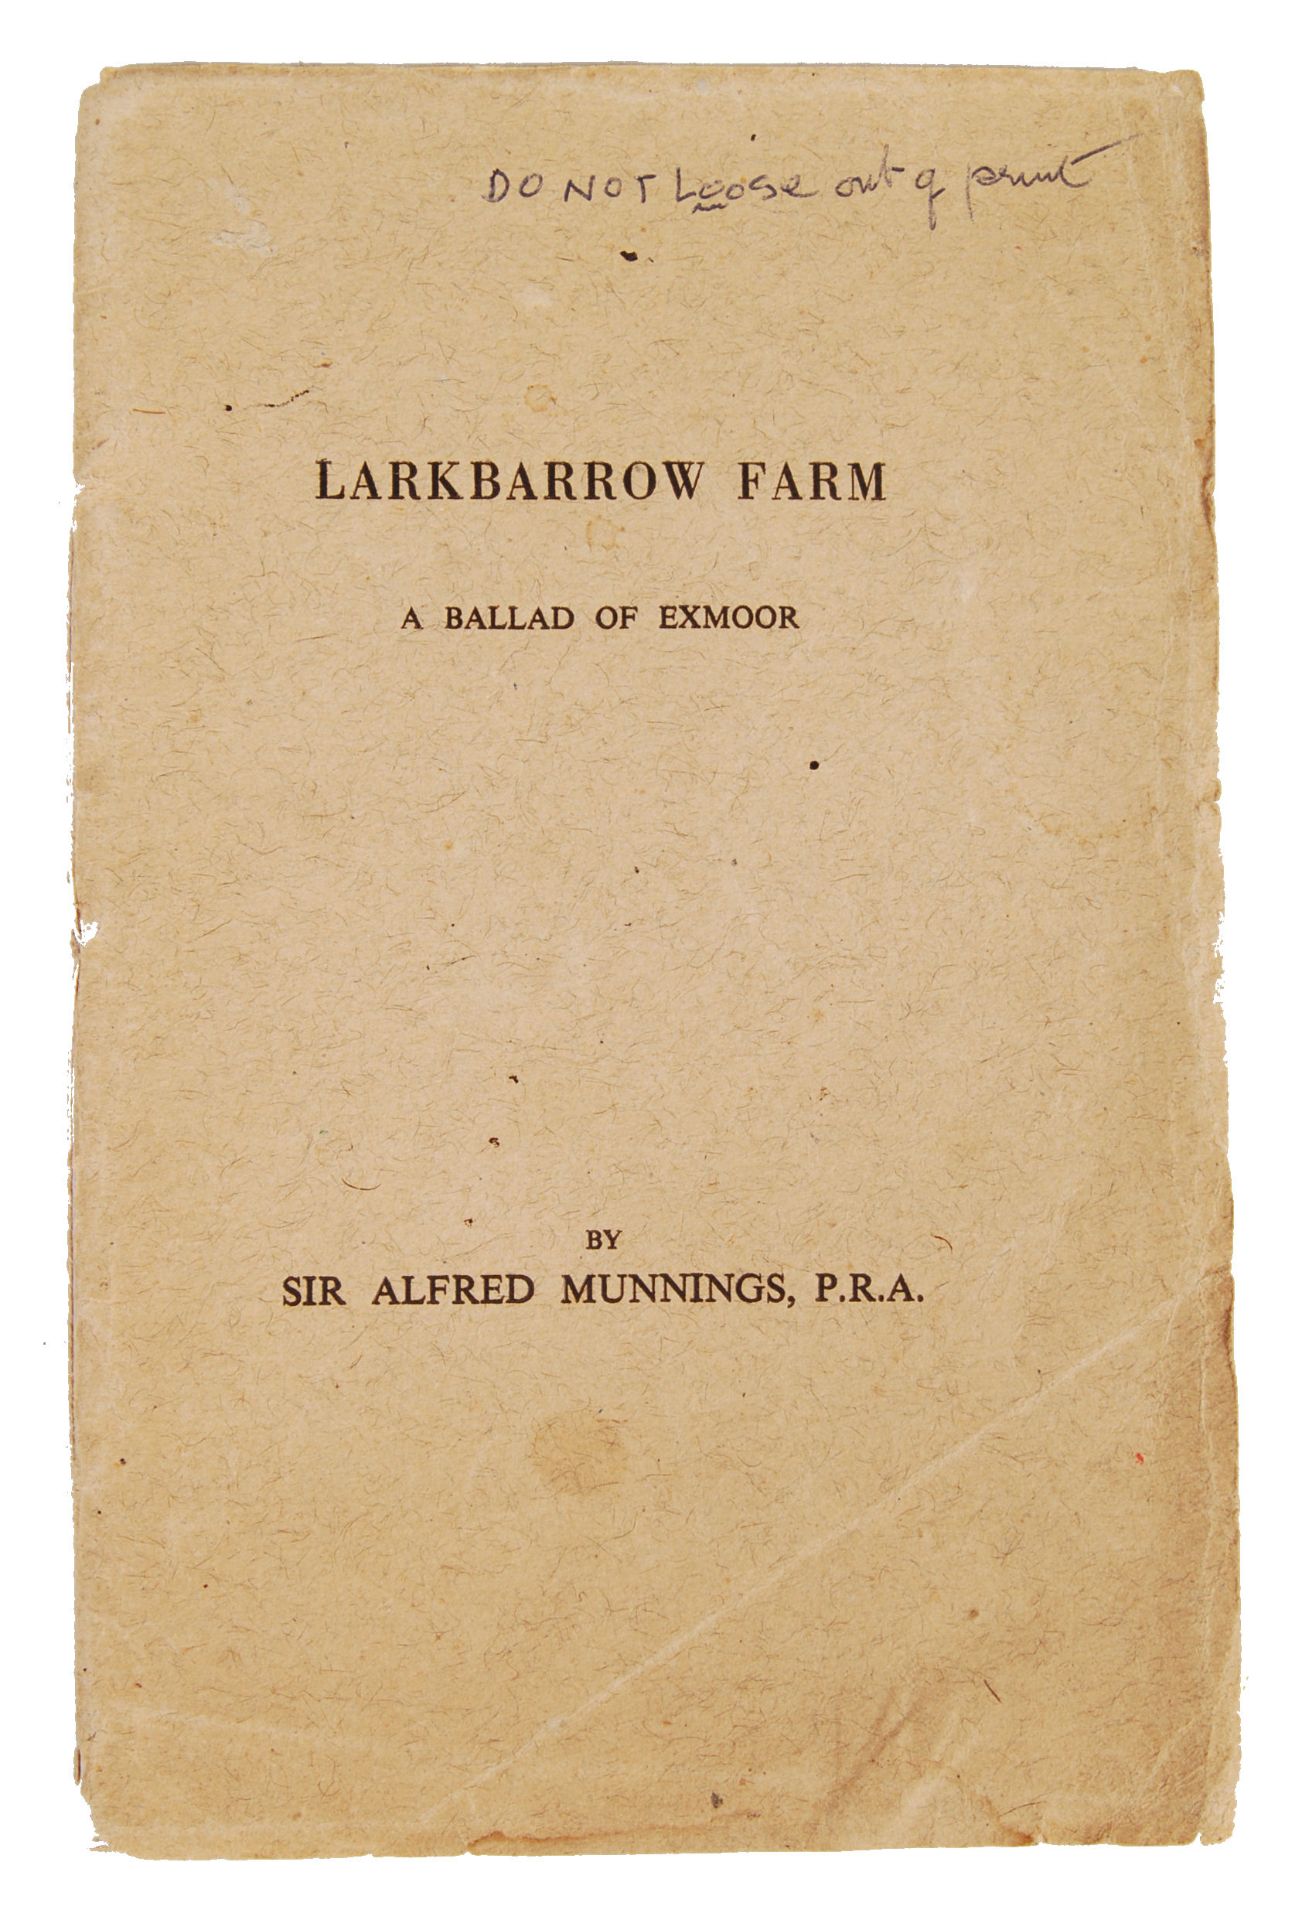 SIR ALFRED JAMES MUNNINGS SIGNED COPY OF LARKBARROW FARM